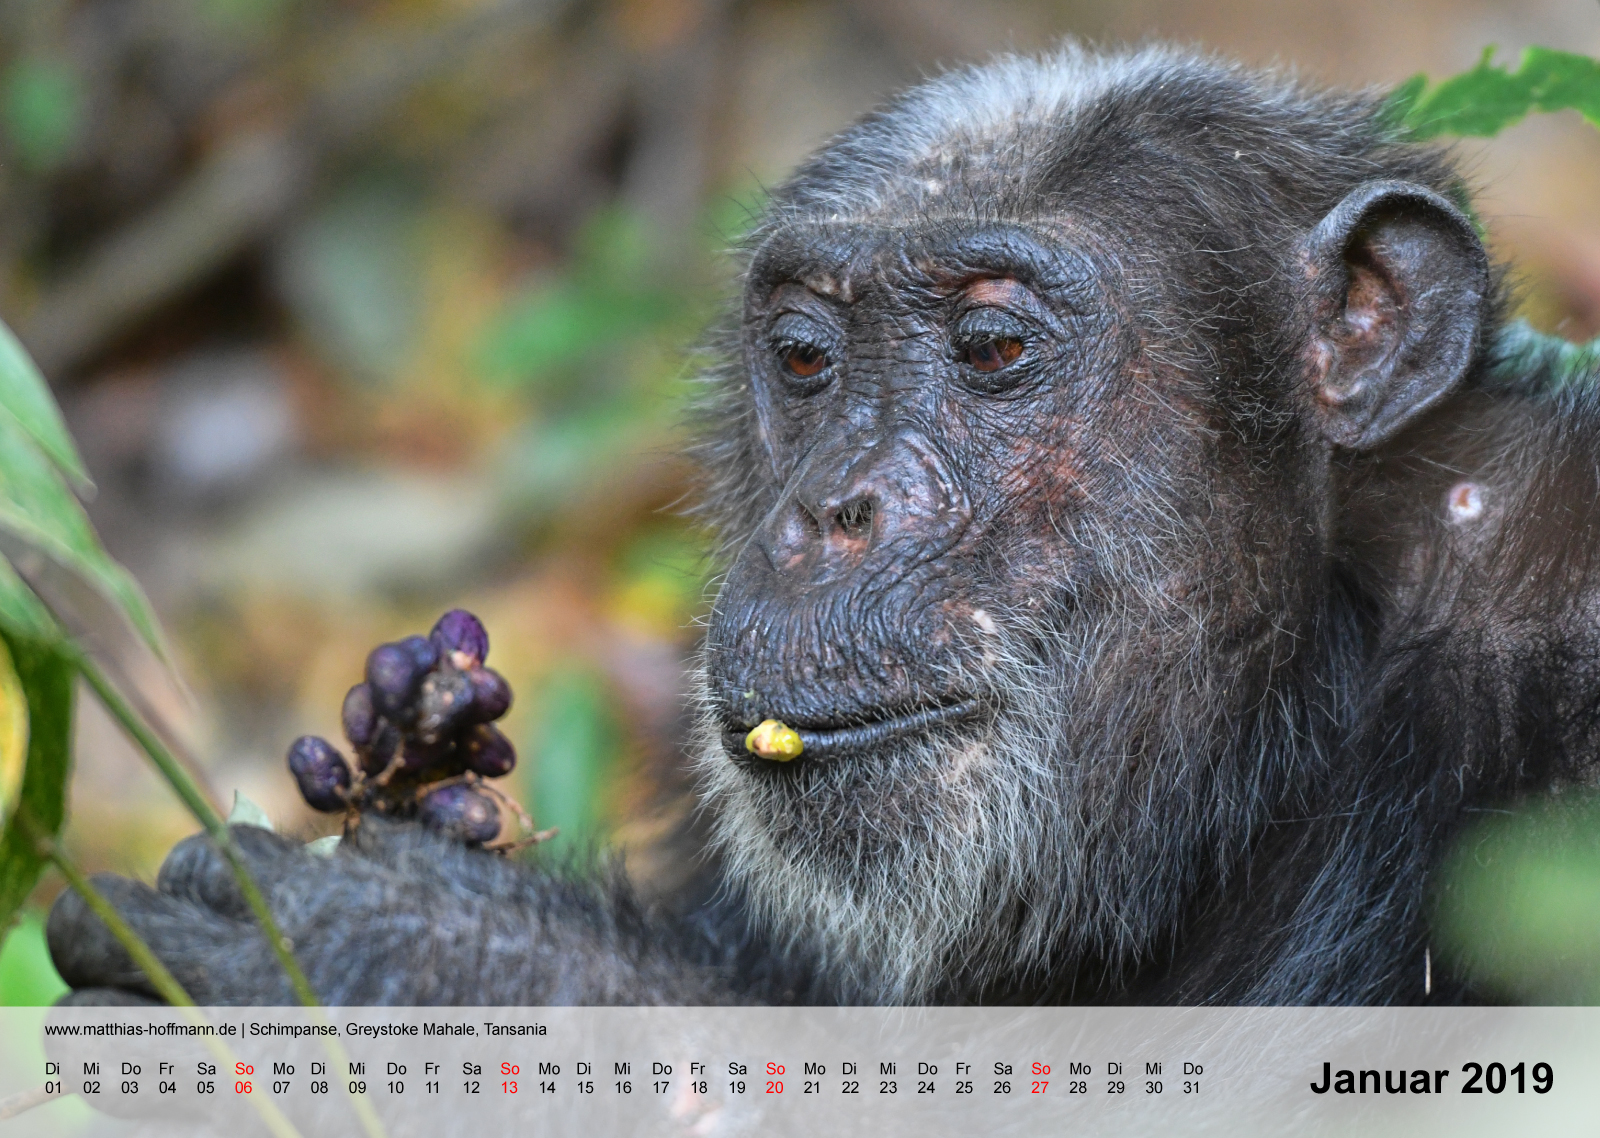 Schimpanse, Greystoke Mahale, Tansania | Kalender 2019 - Januar